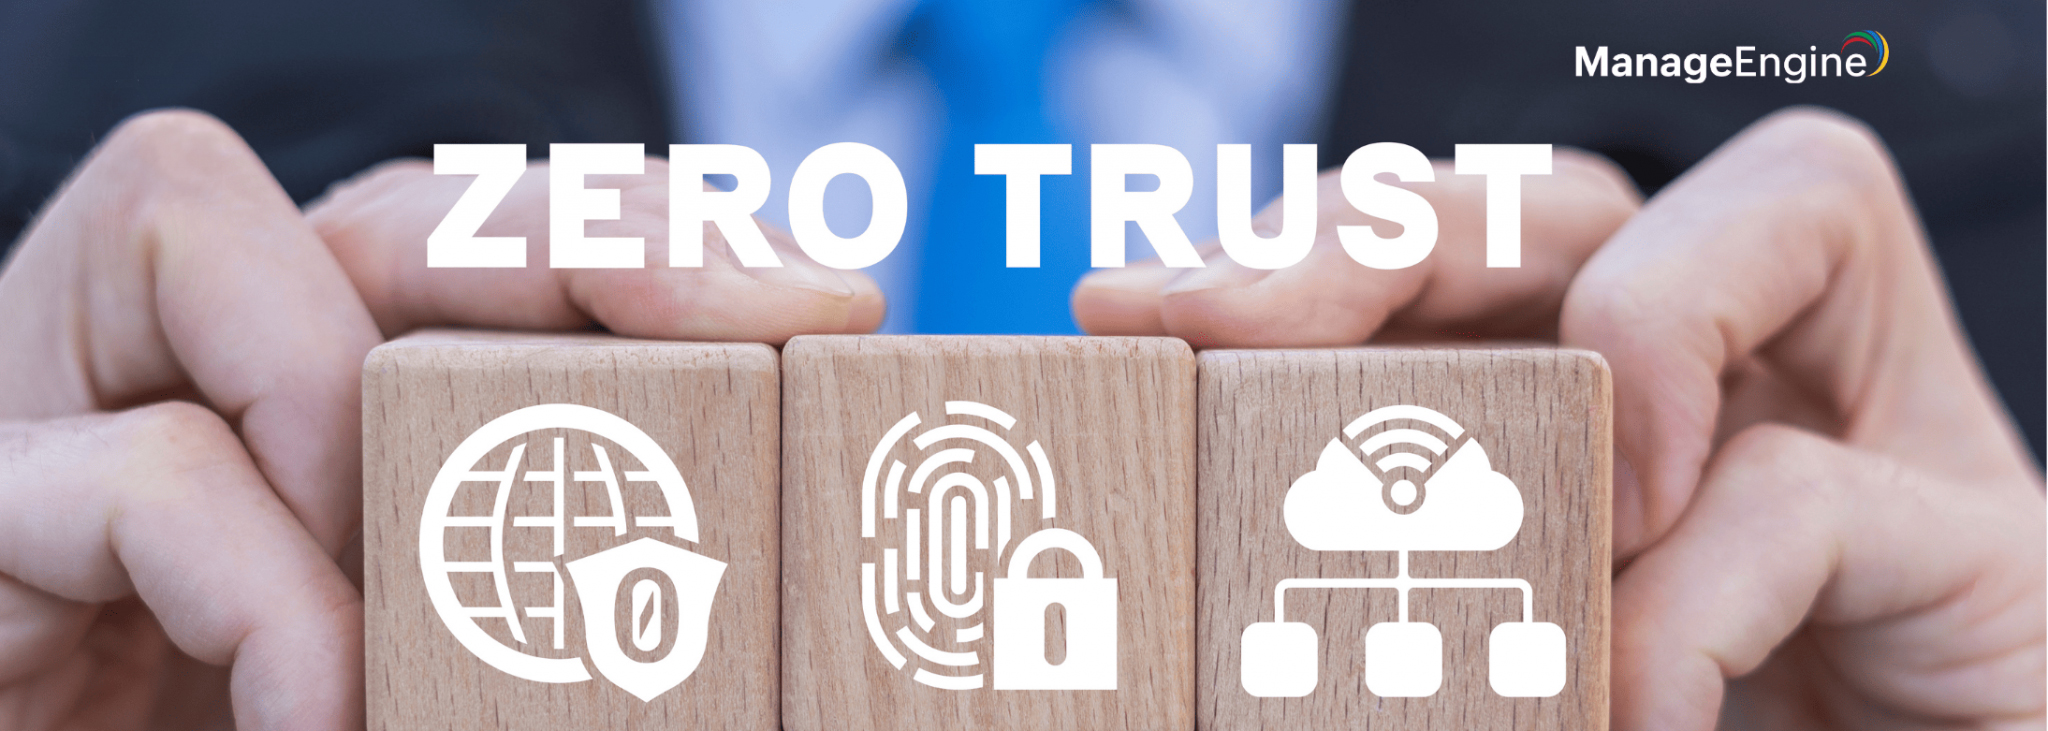 Tres mitos comunes de Zero Trust, desacreditados